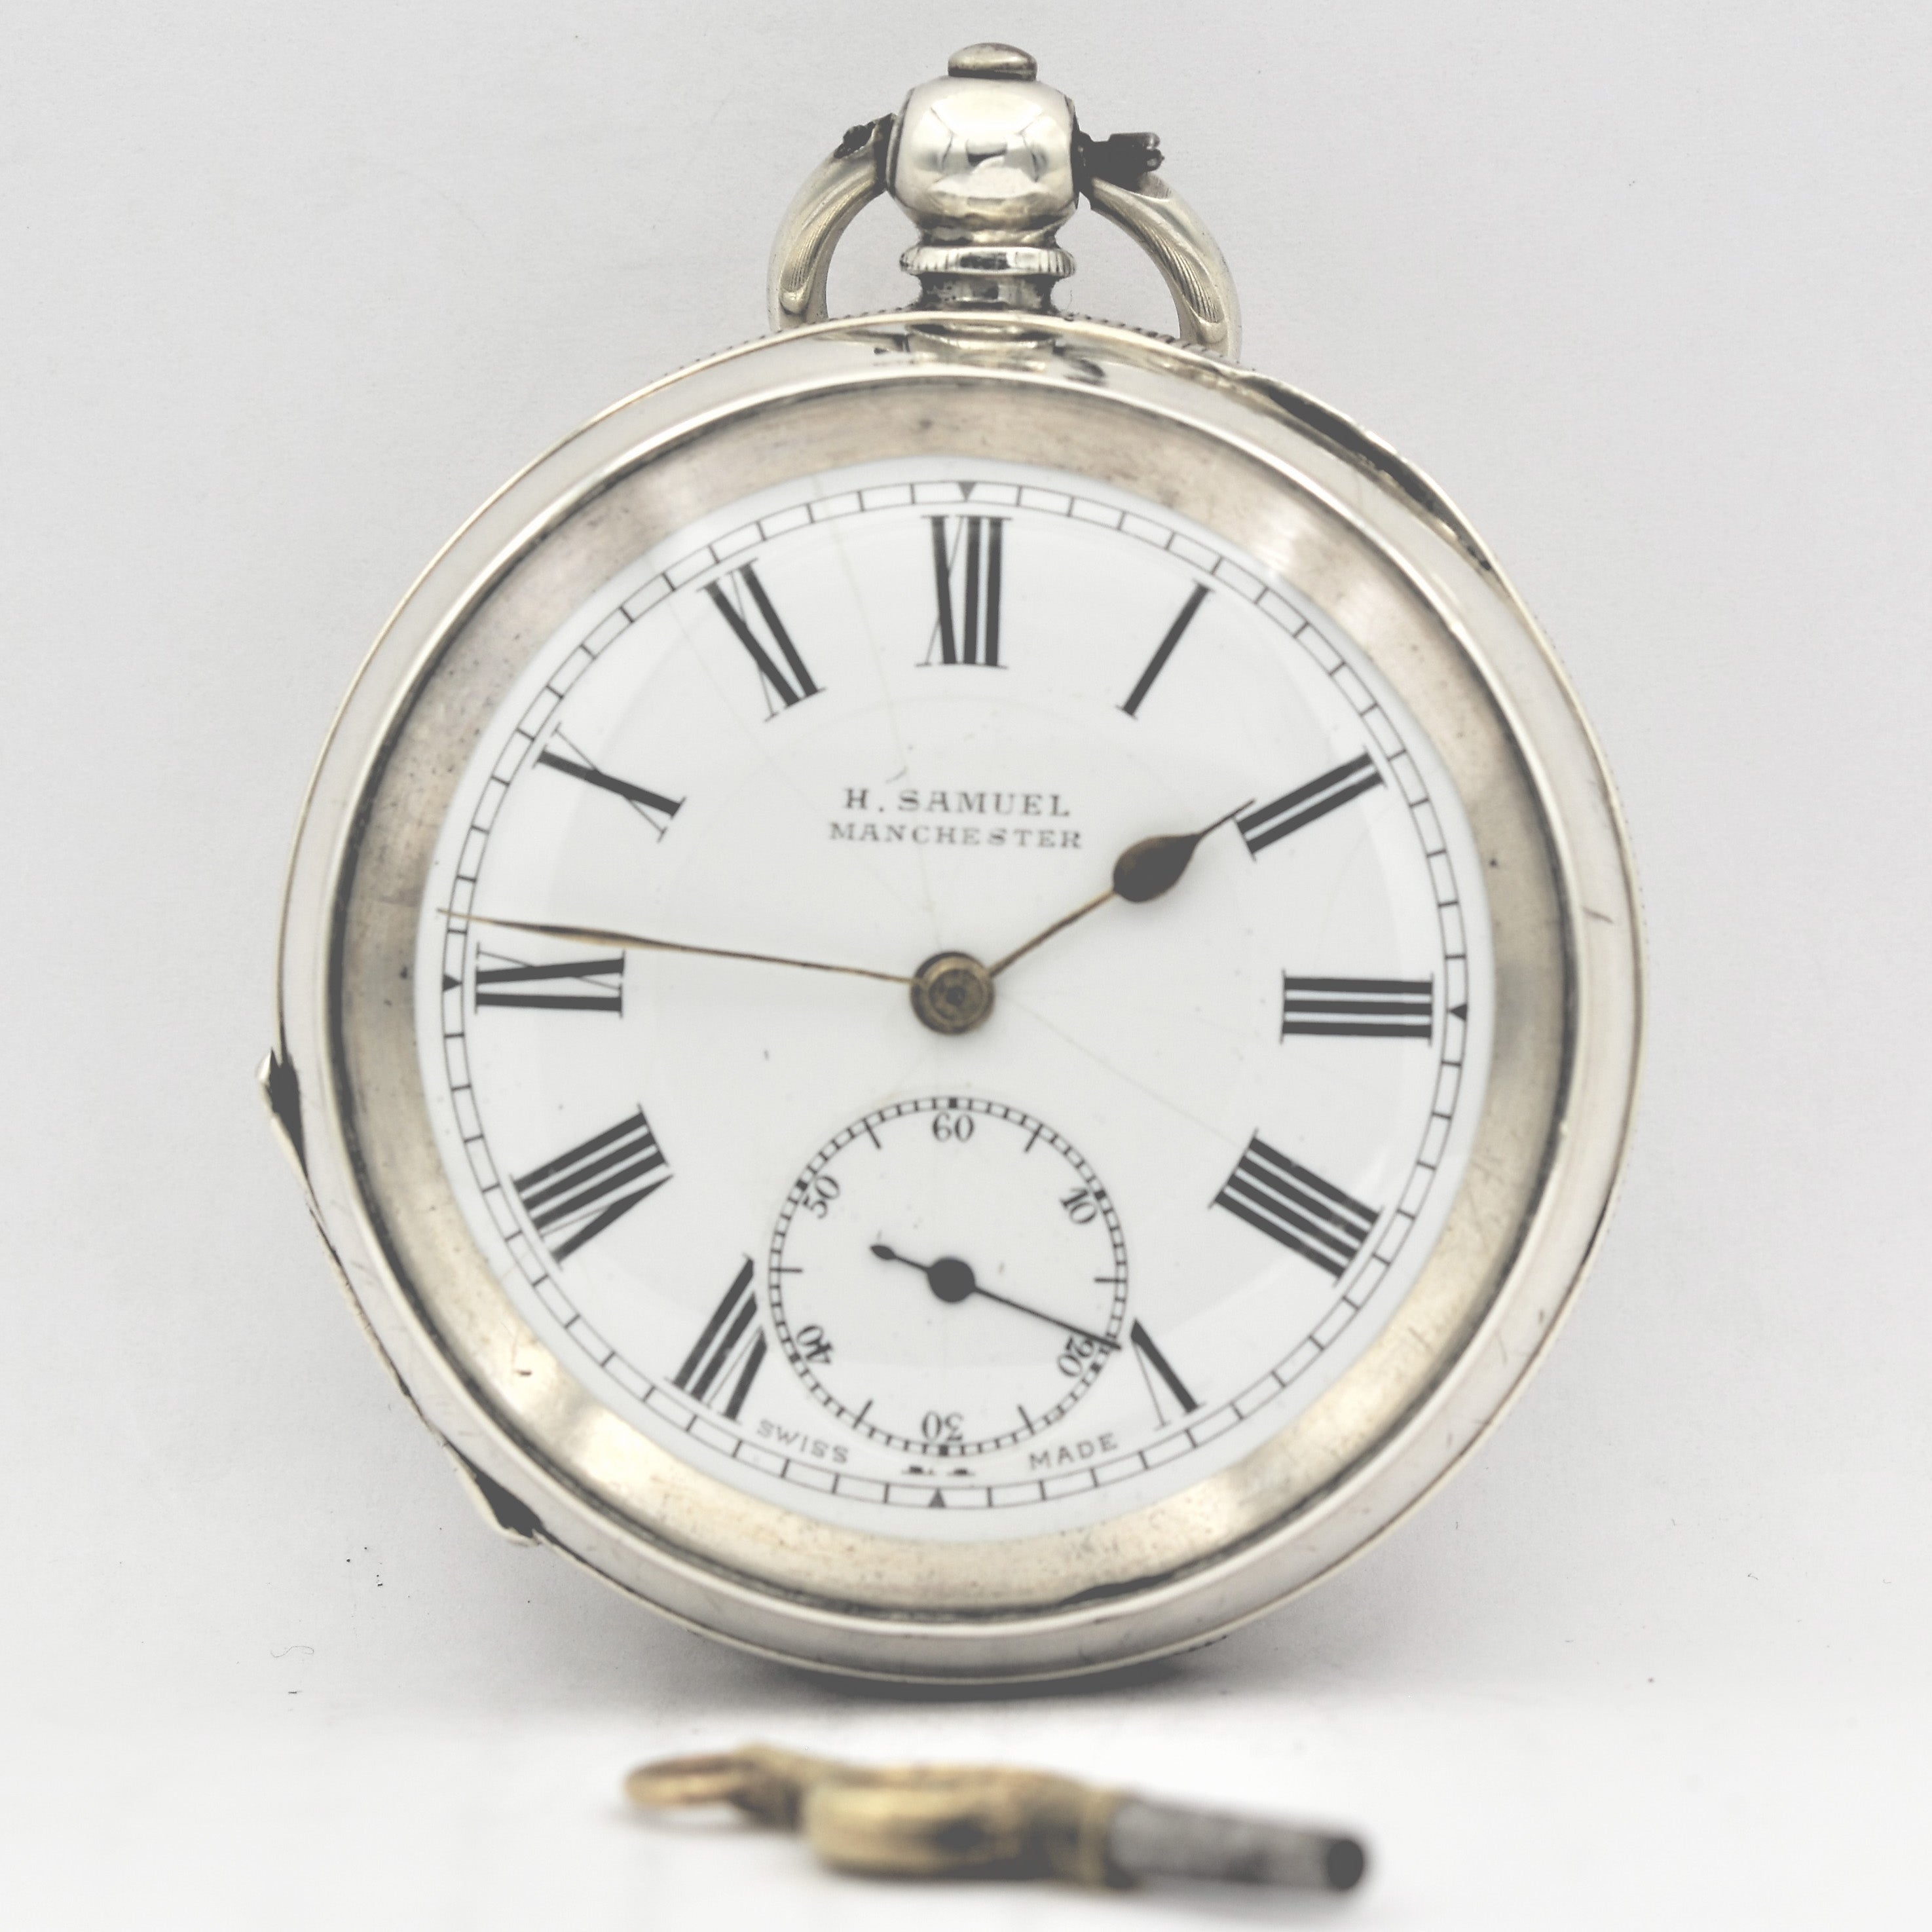 vintage silver pocket watch